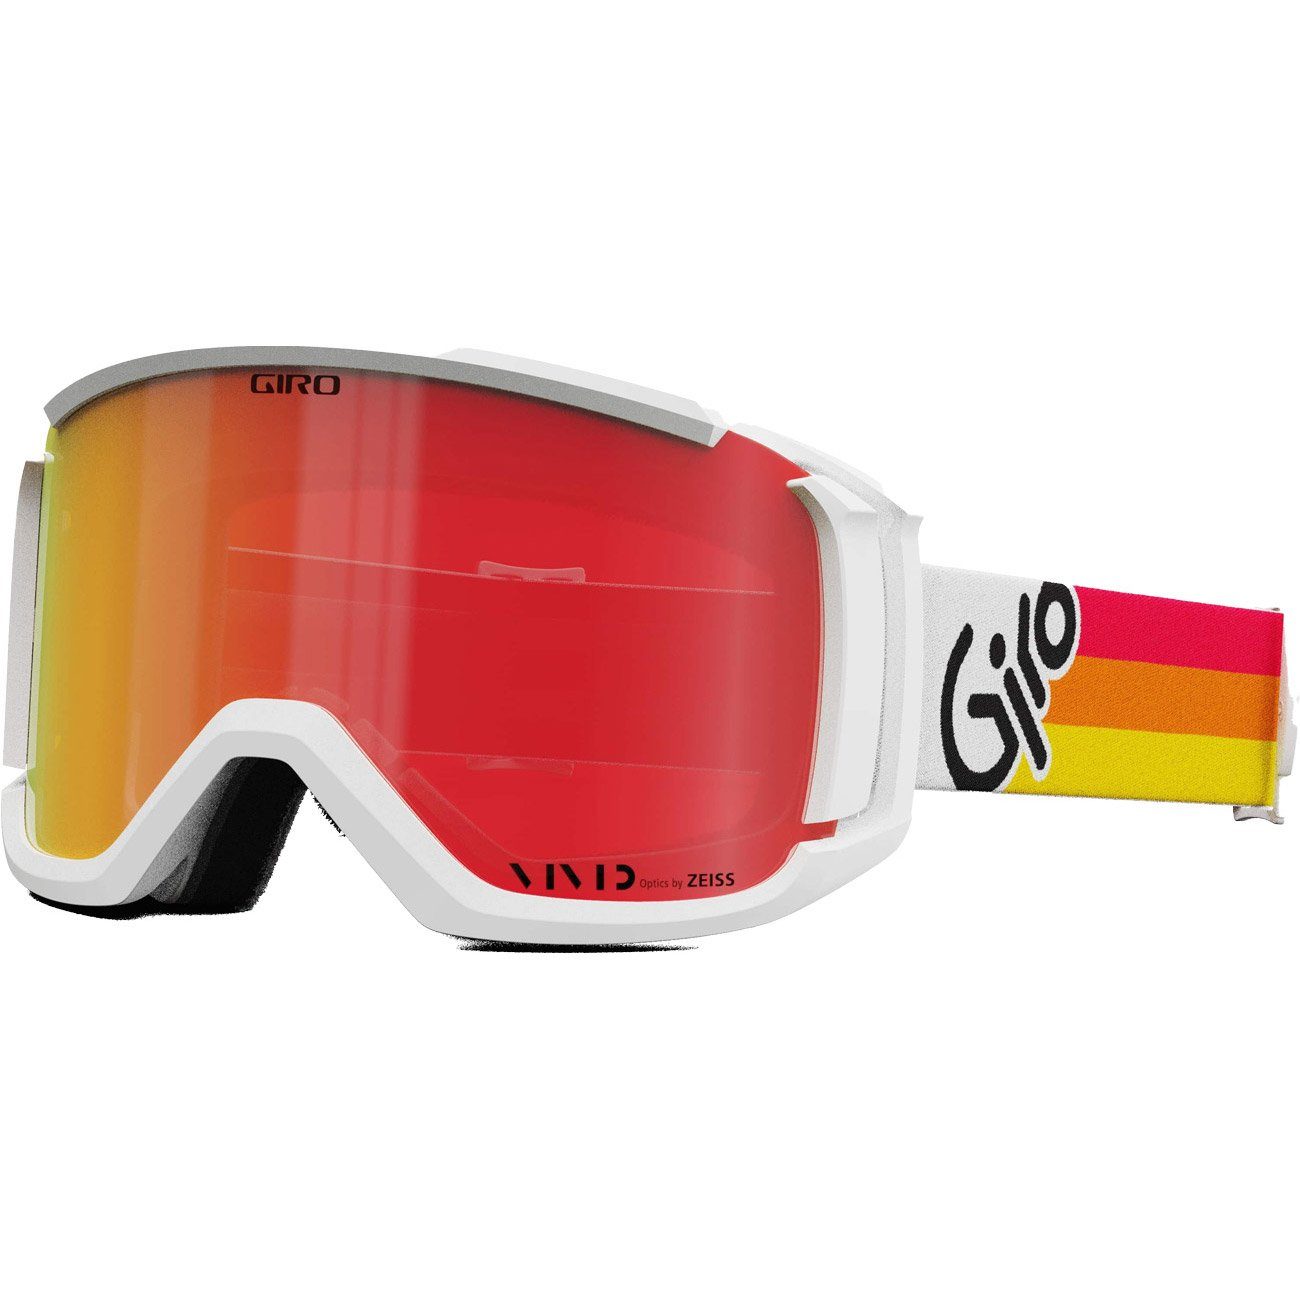 Giro Snowboardbrille, Revolt red & orange vintage // vivid ember | Brillen